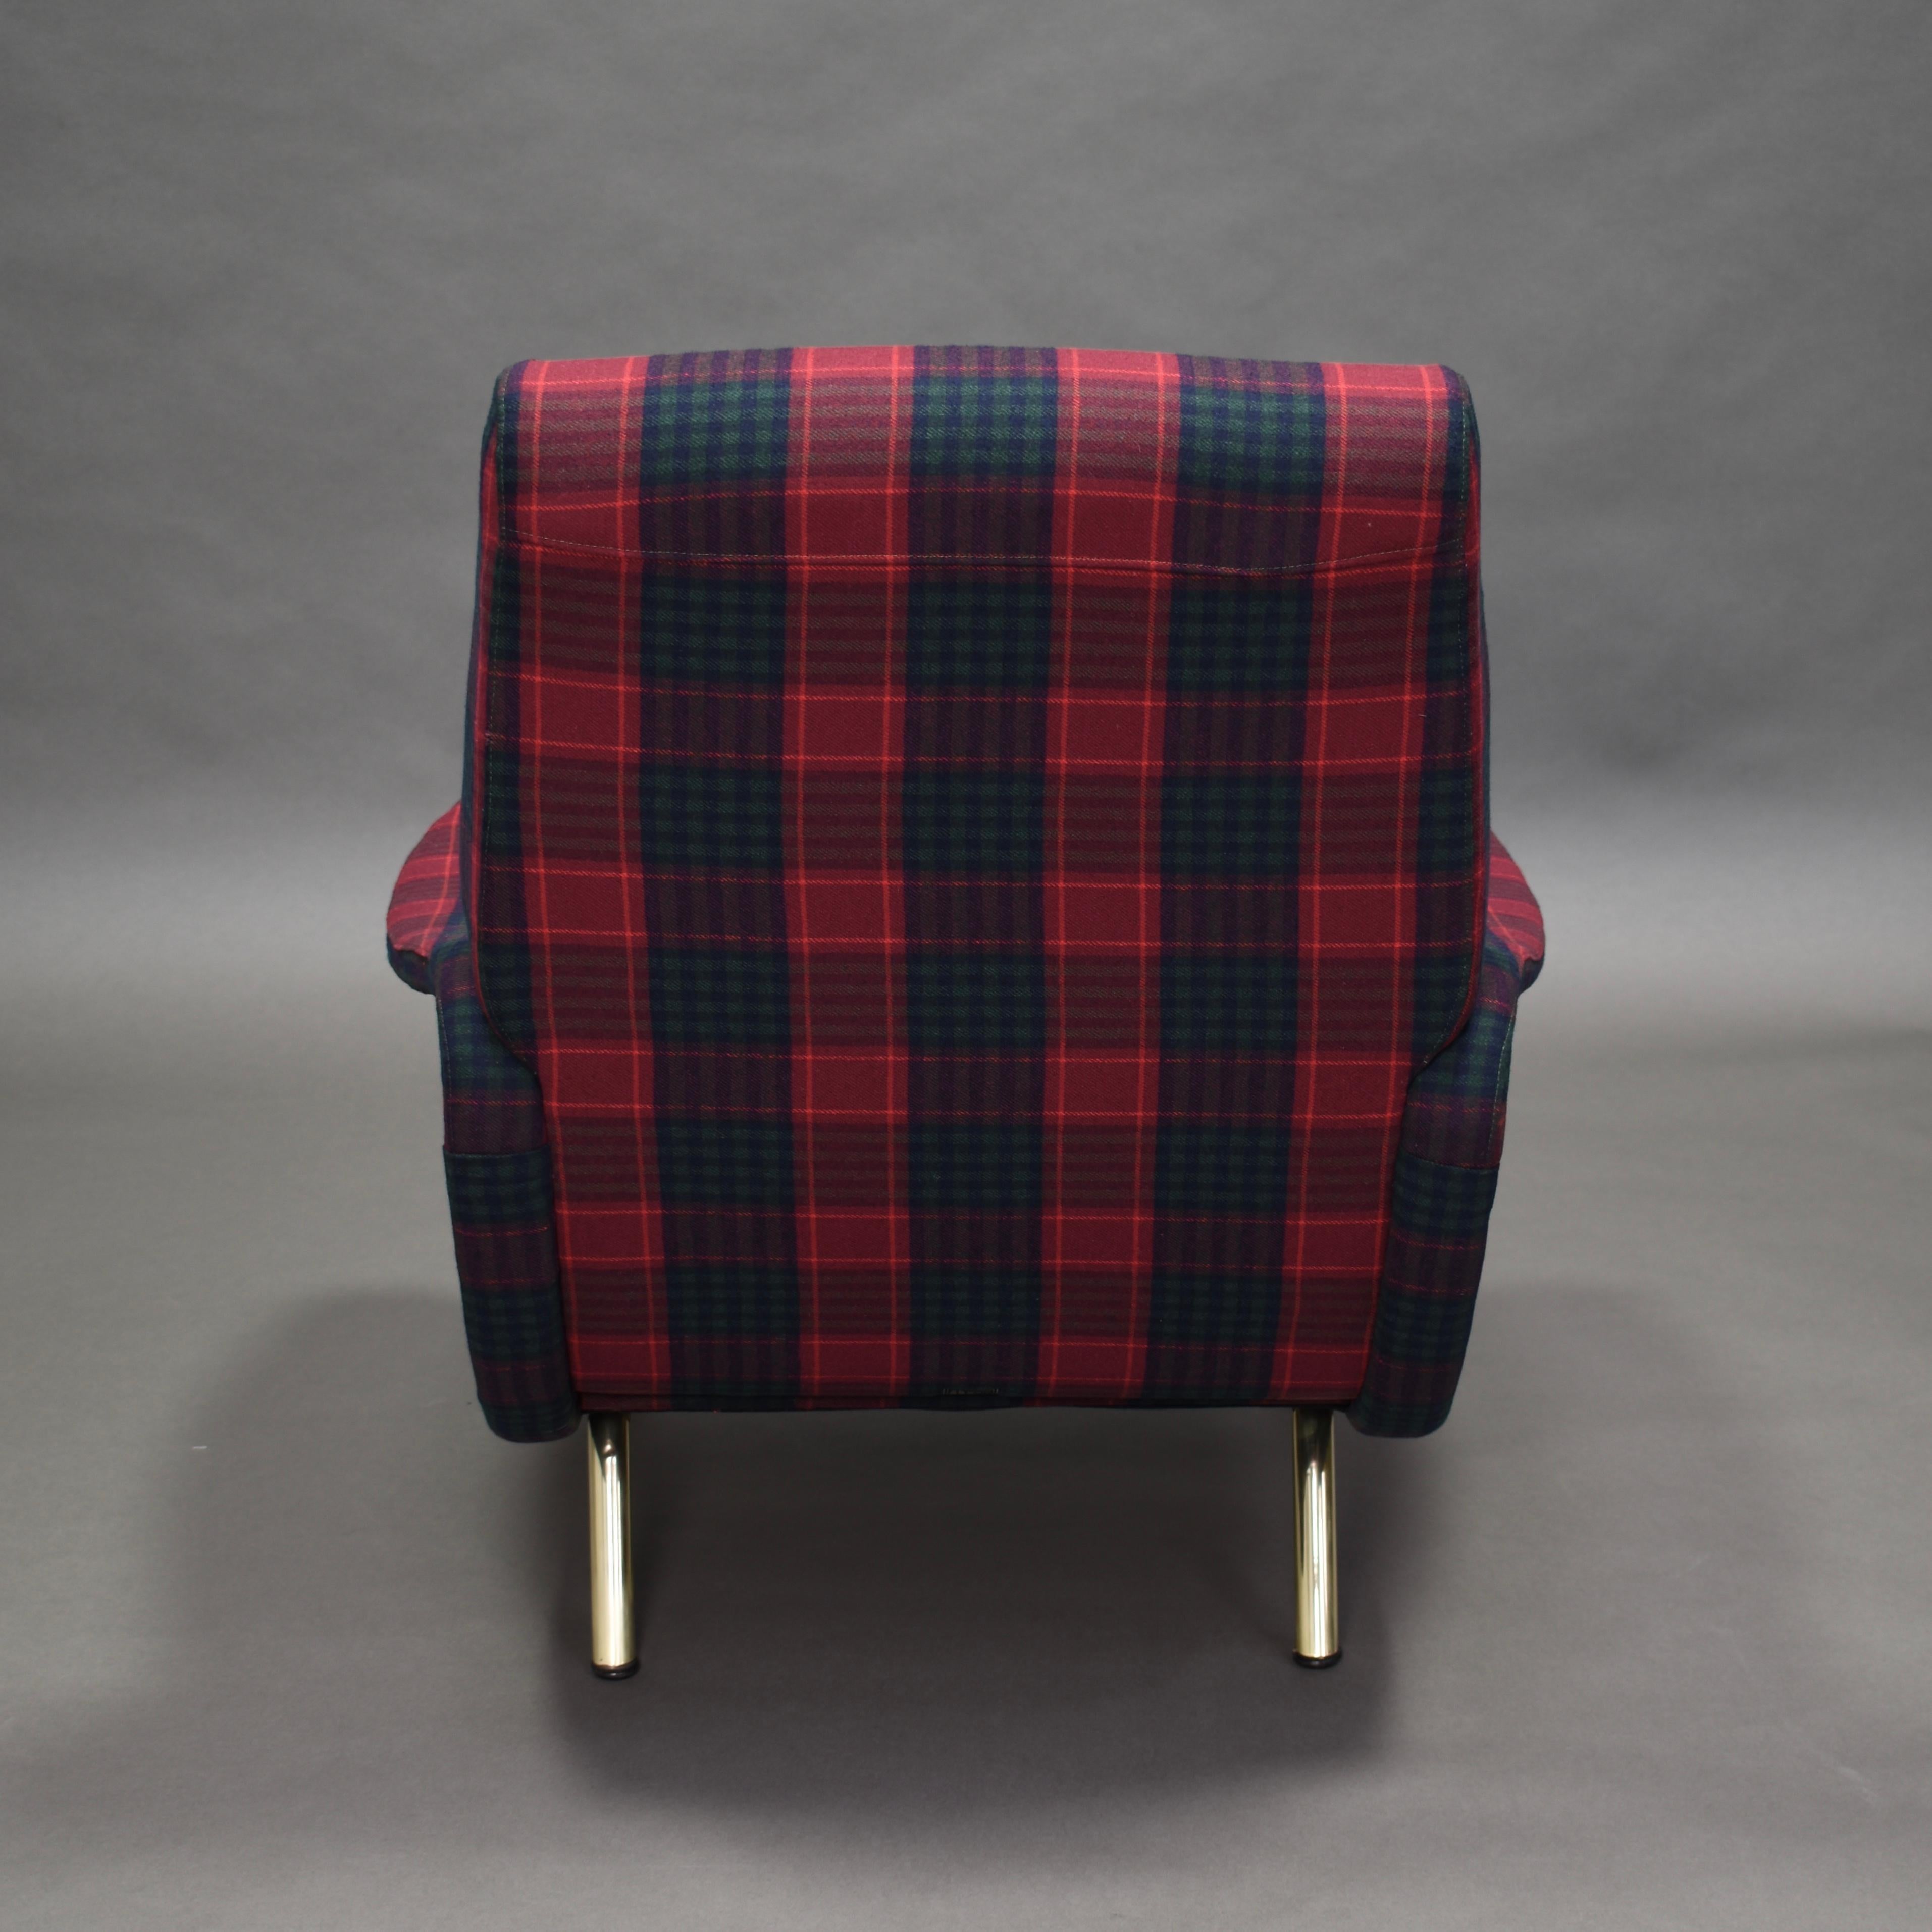 Italian Marco Zanuso 'Lady' Chair by Arflex in New Fabric and Brass, Italy, 1951